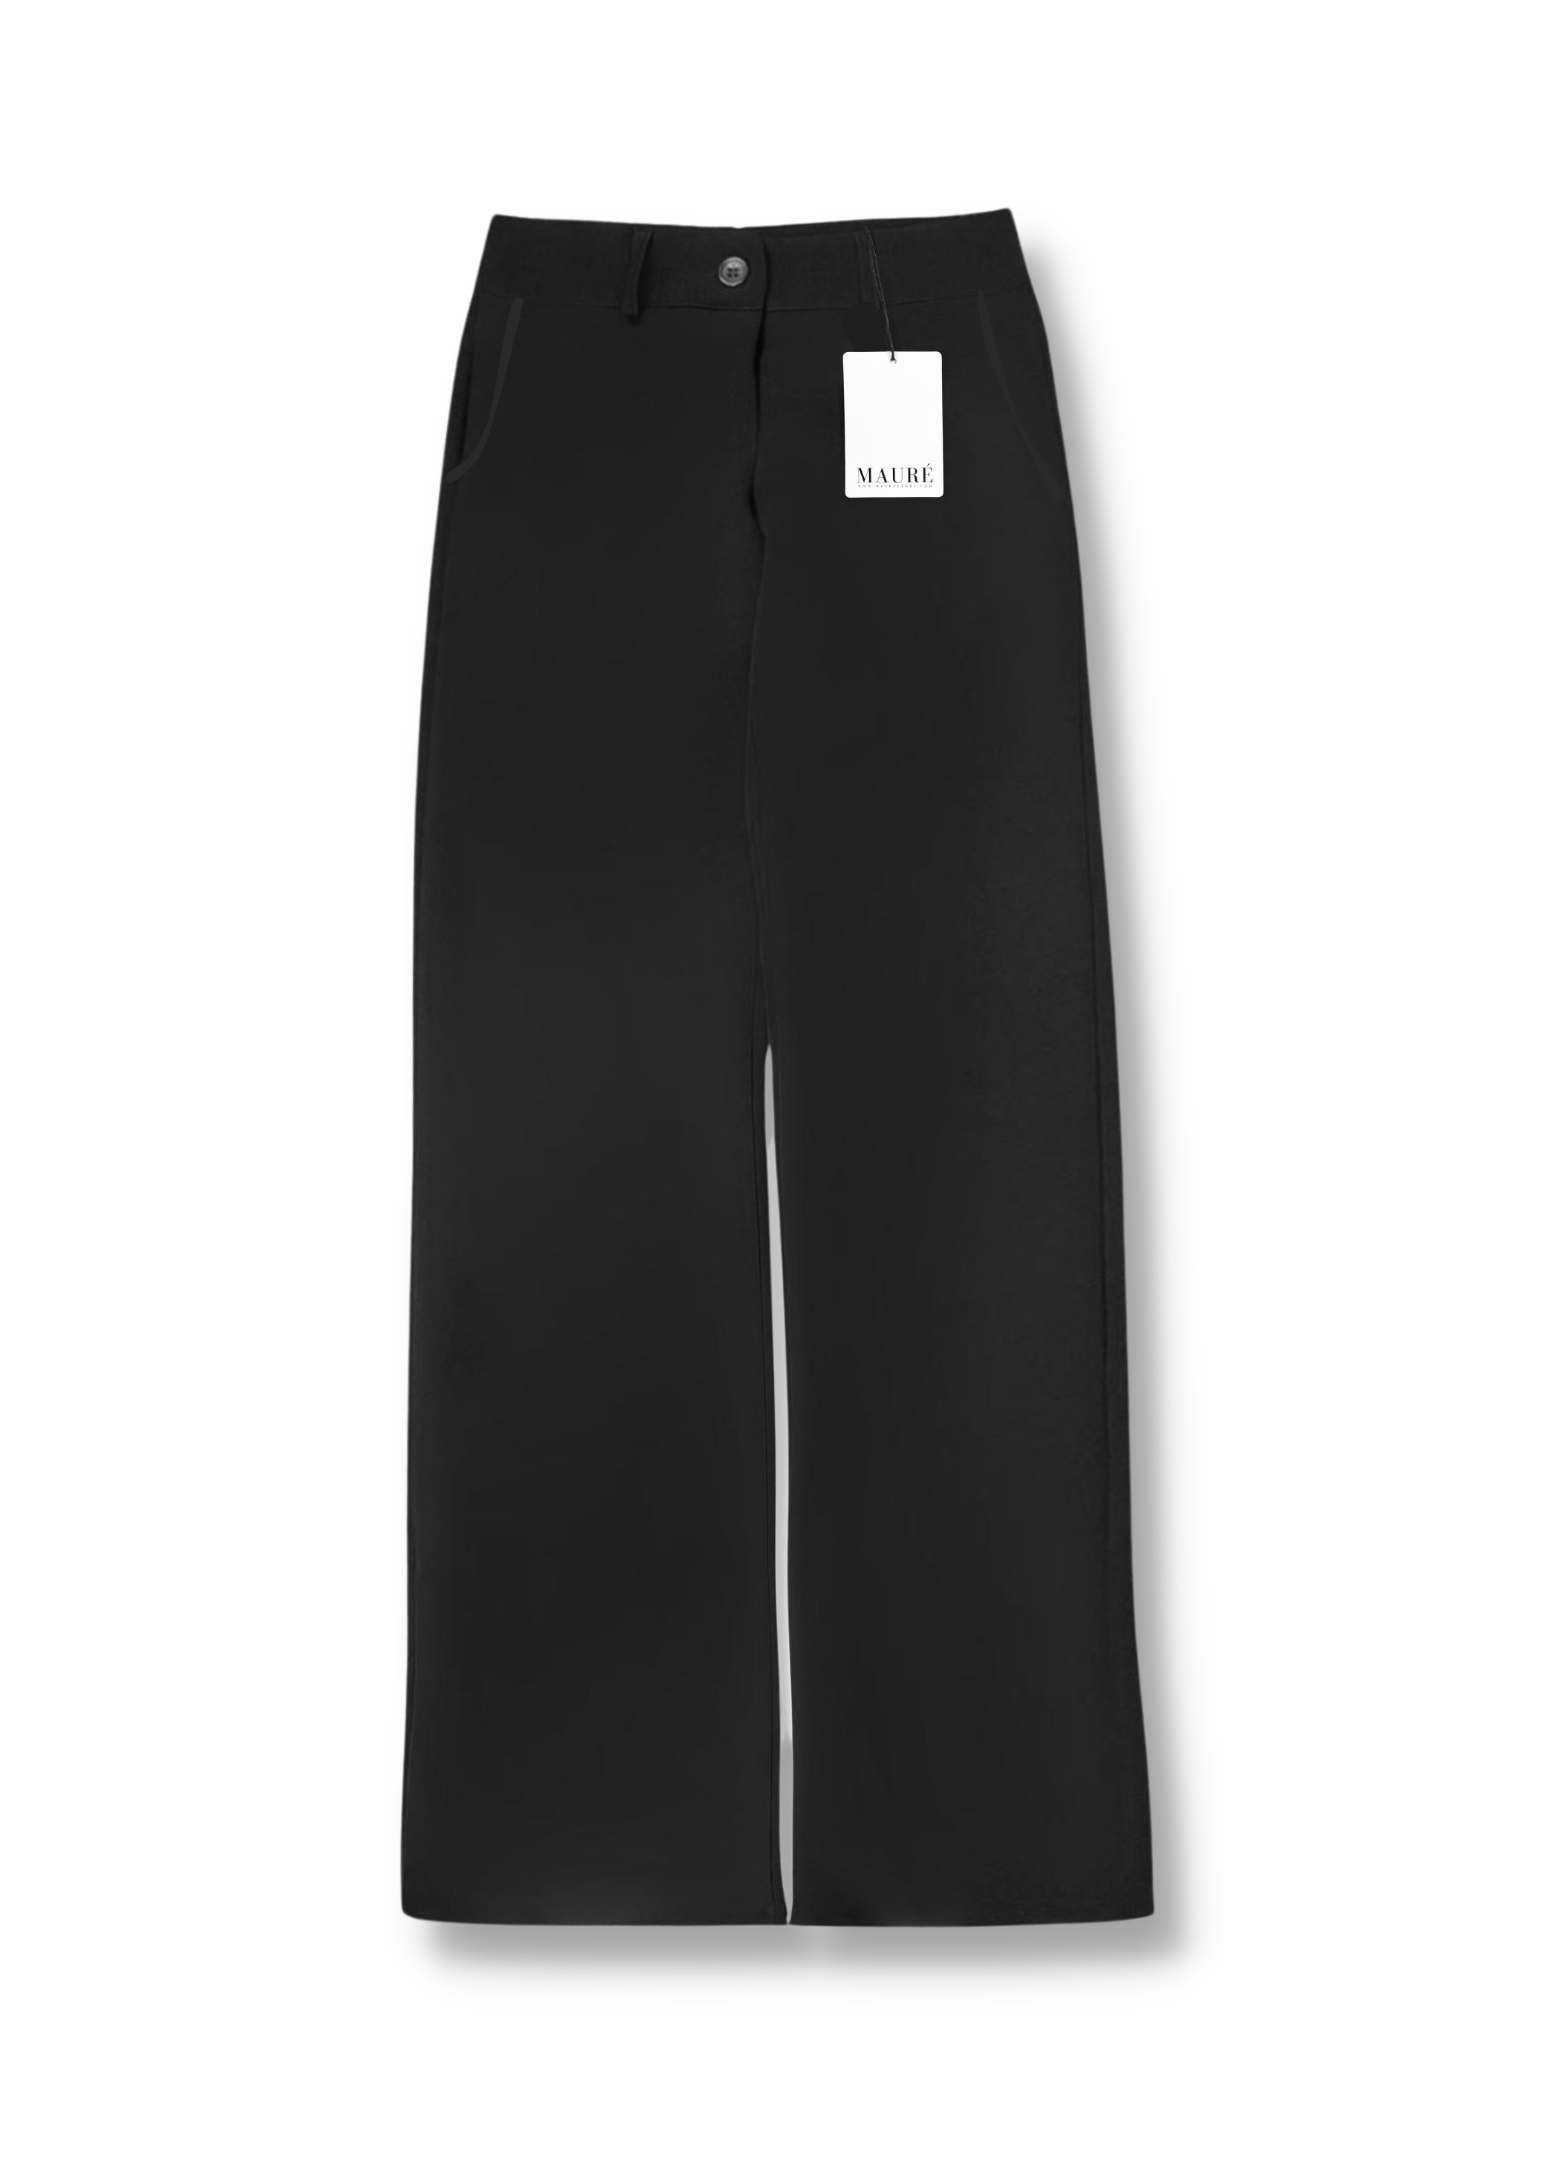 Low/mid waist straight leg pants casual black (REGULAR) - Mauré